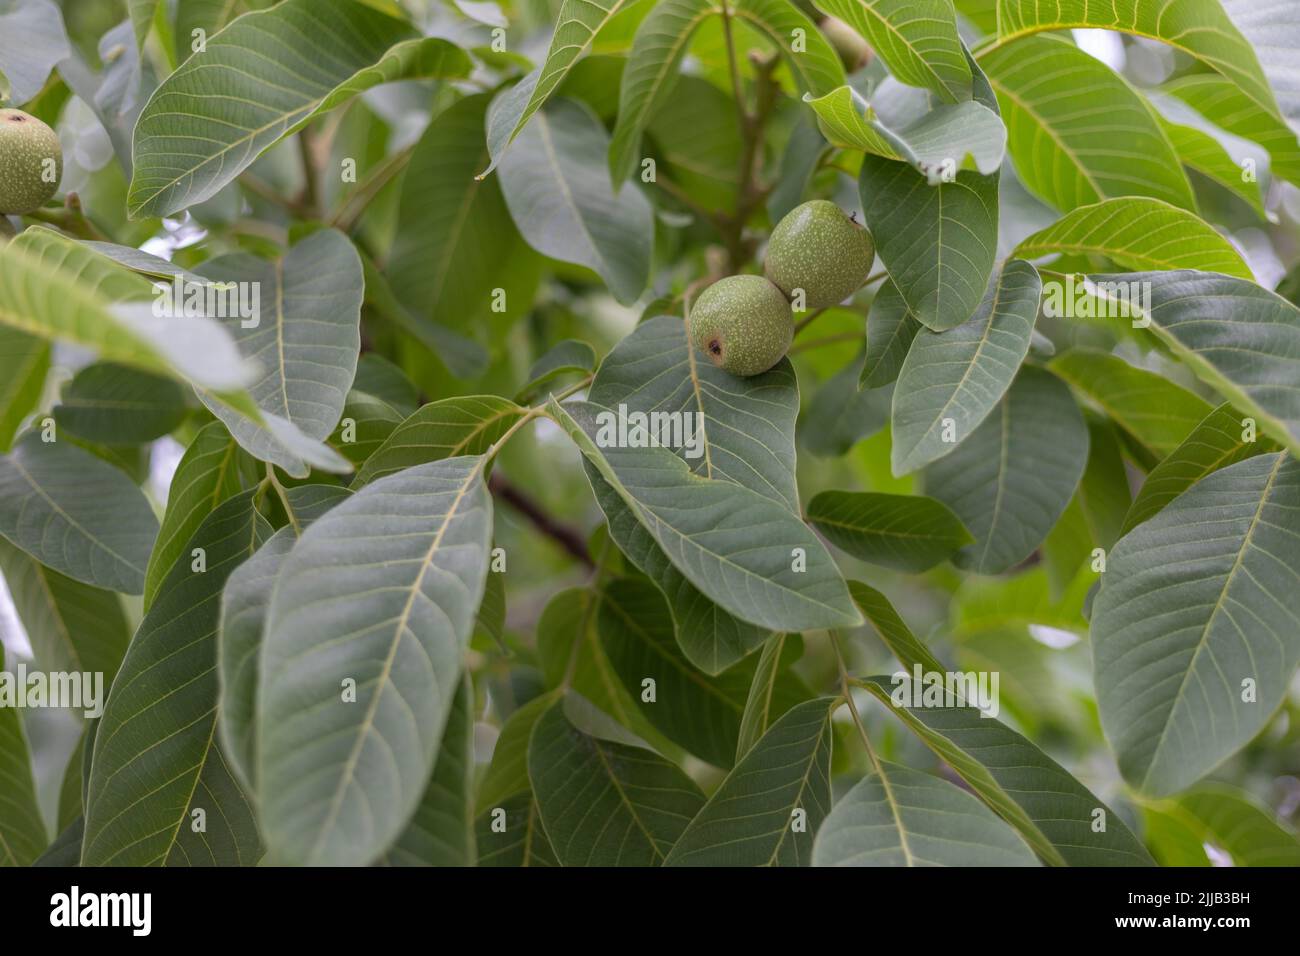 Green walnuts with green shell on a walnut tree Stock Photo